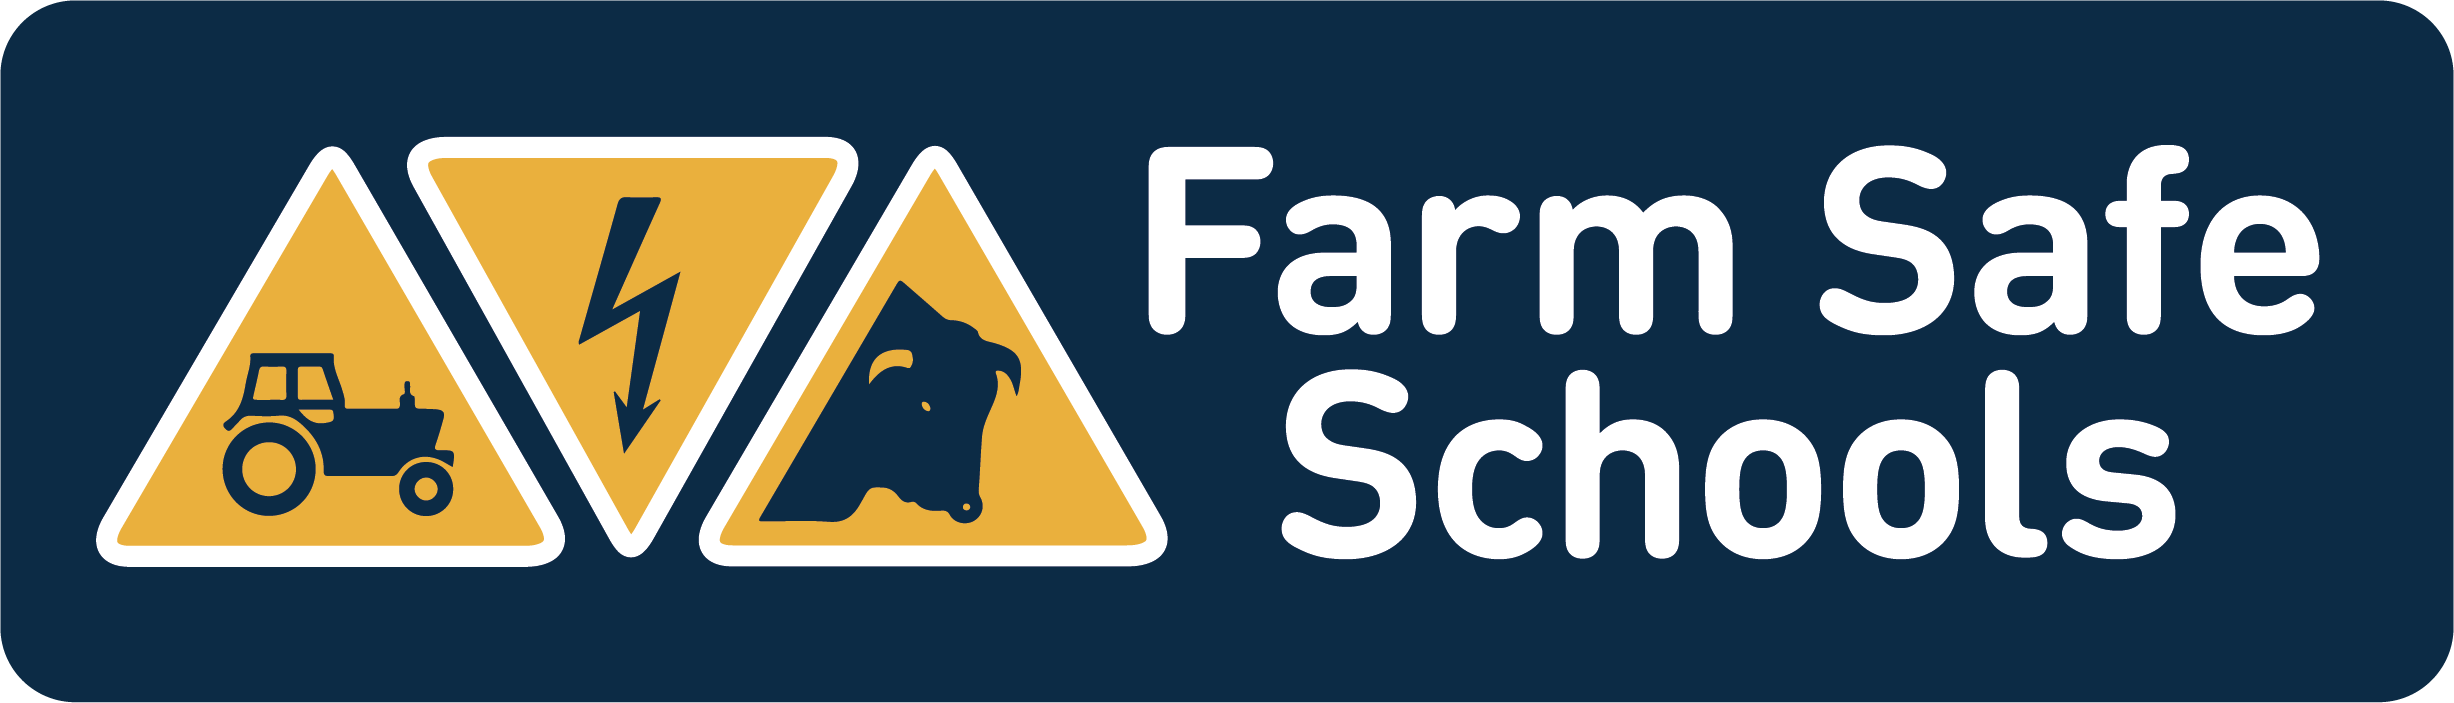 Farm Safe Schools Pilot